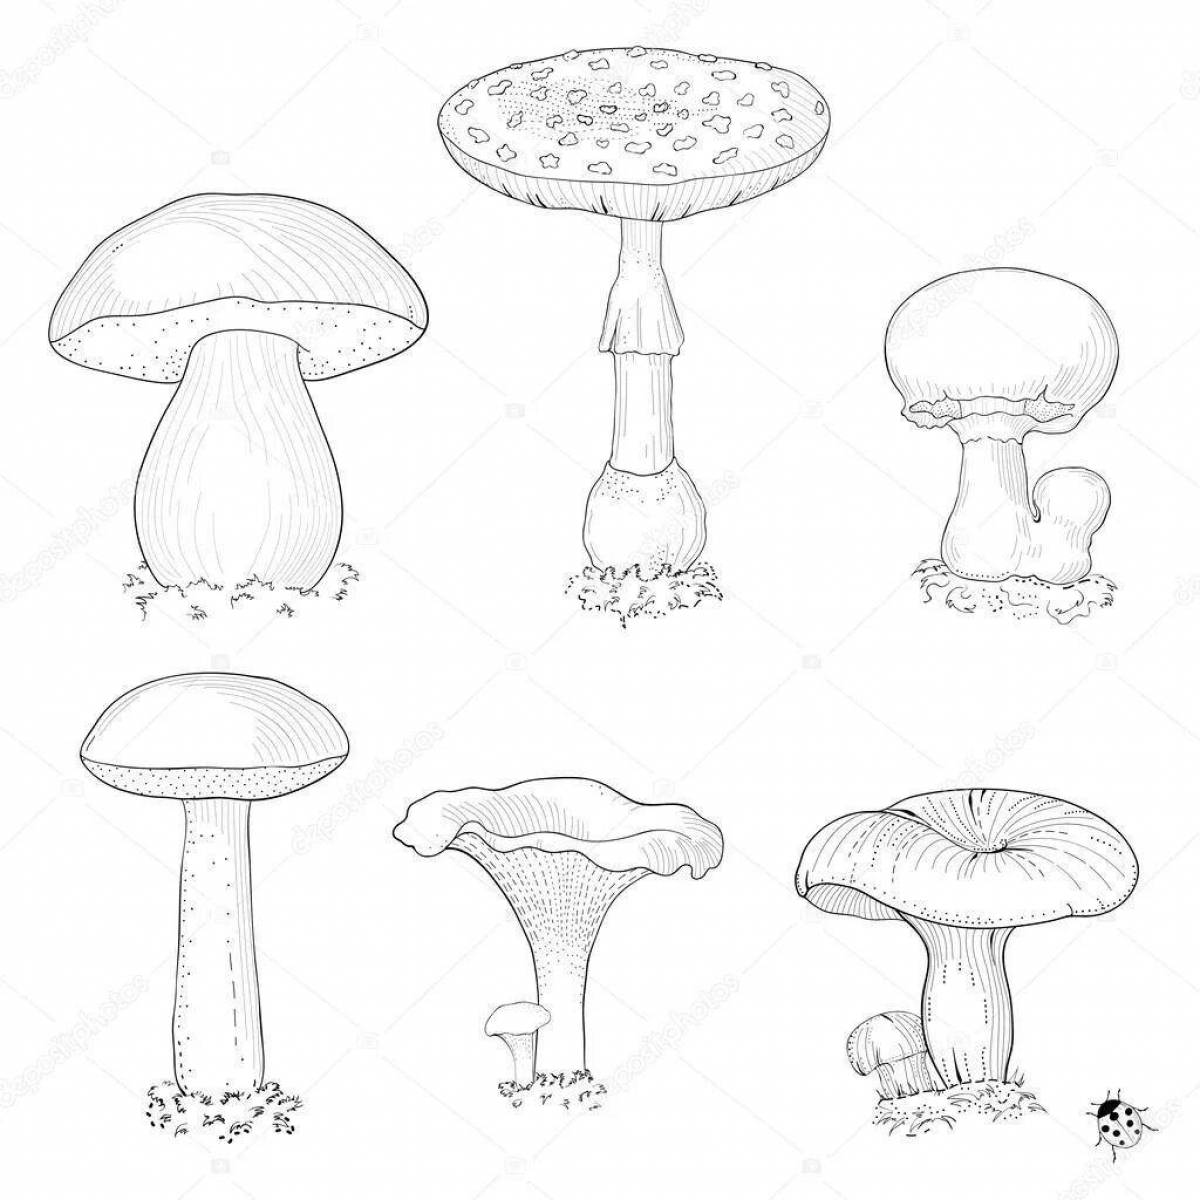 Fun non-edible mushrooms for kids